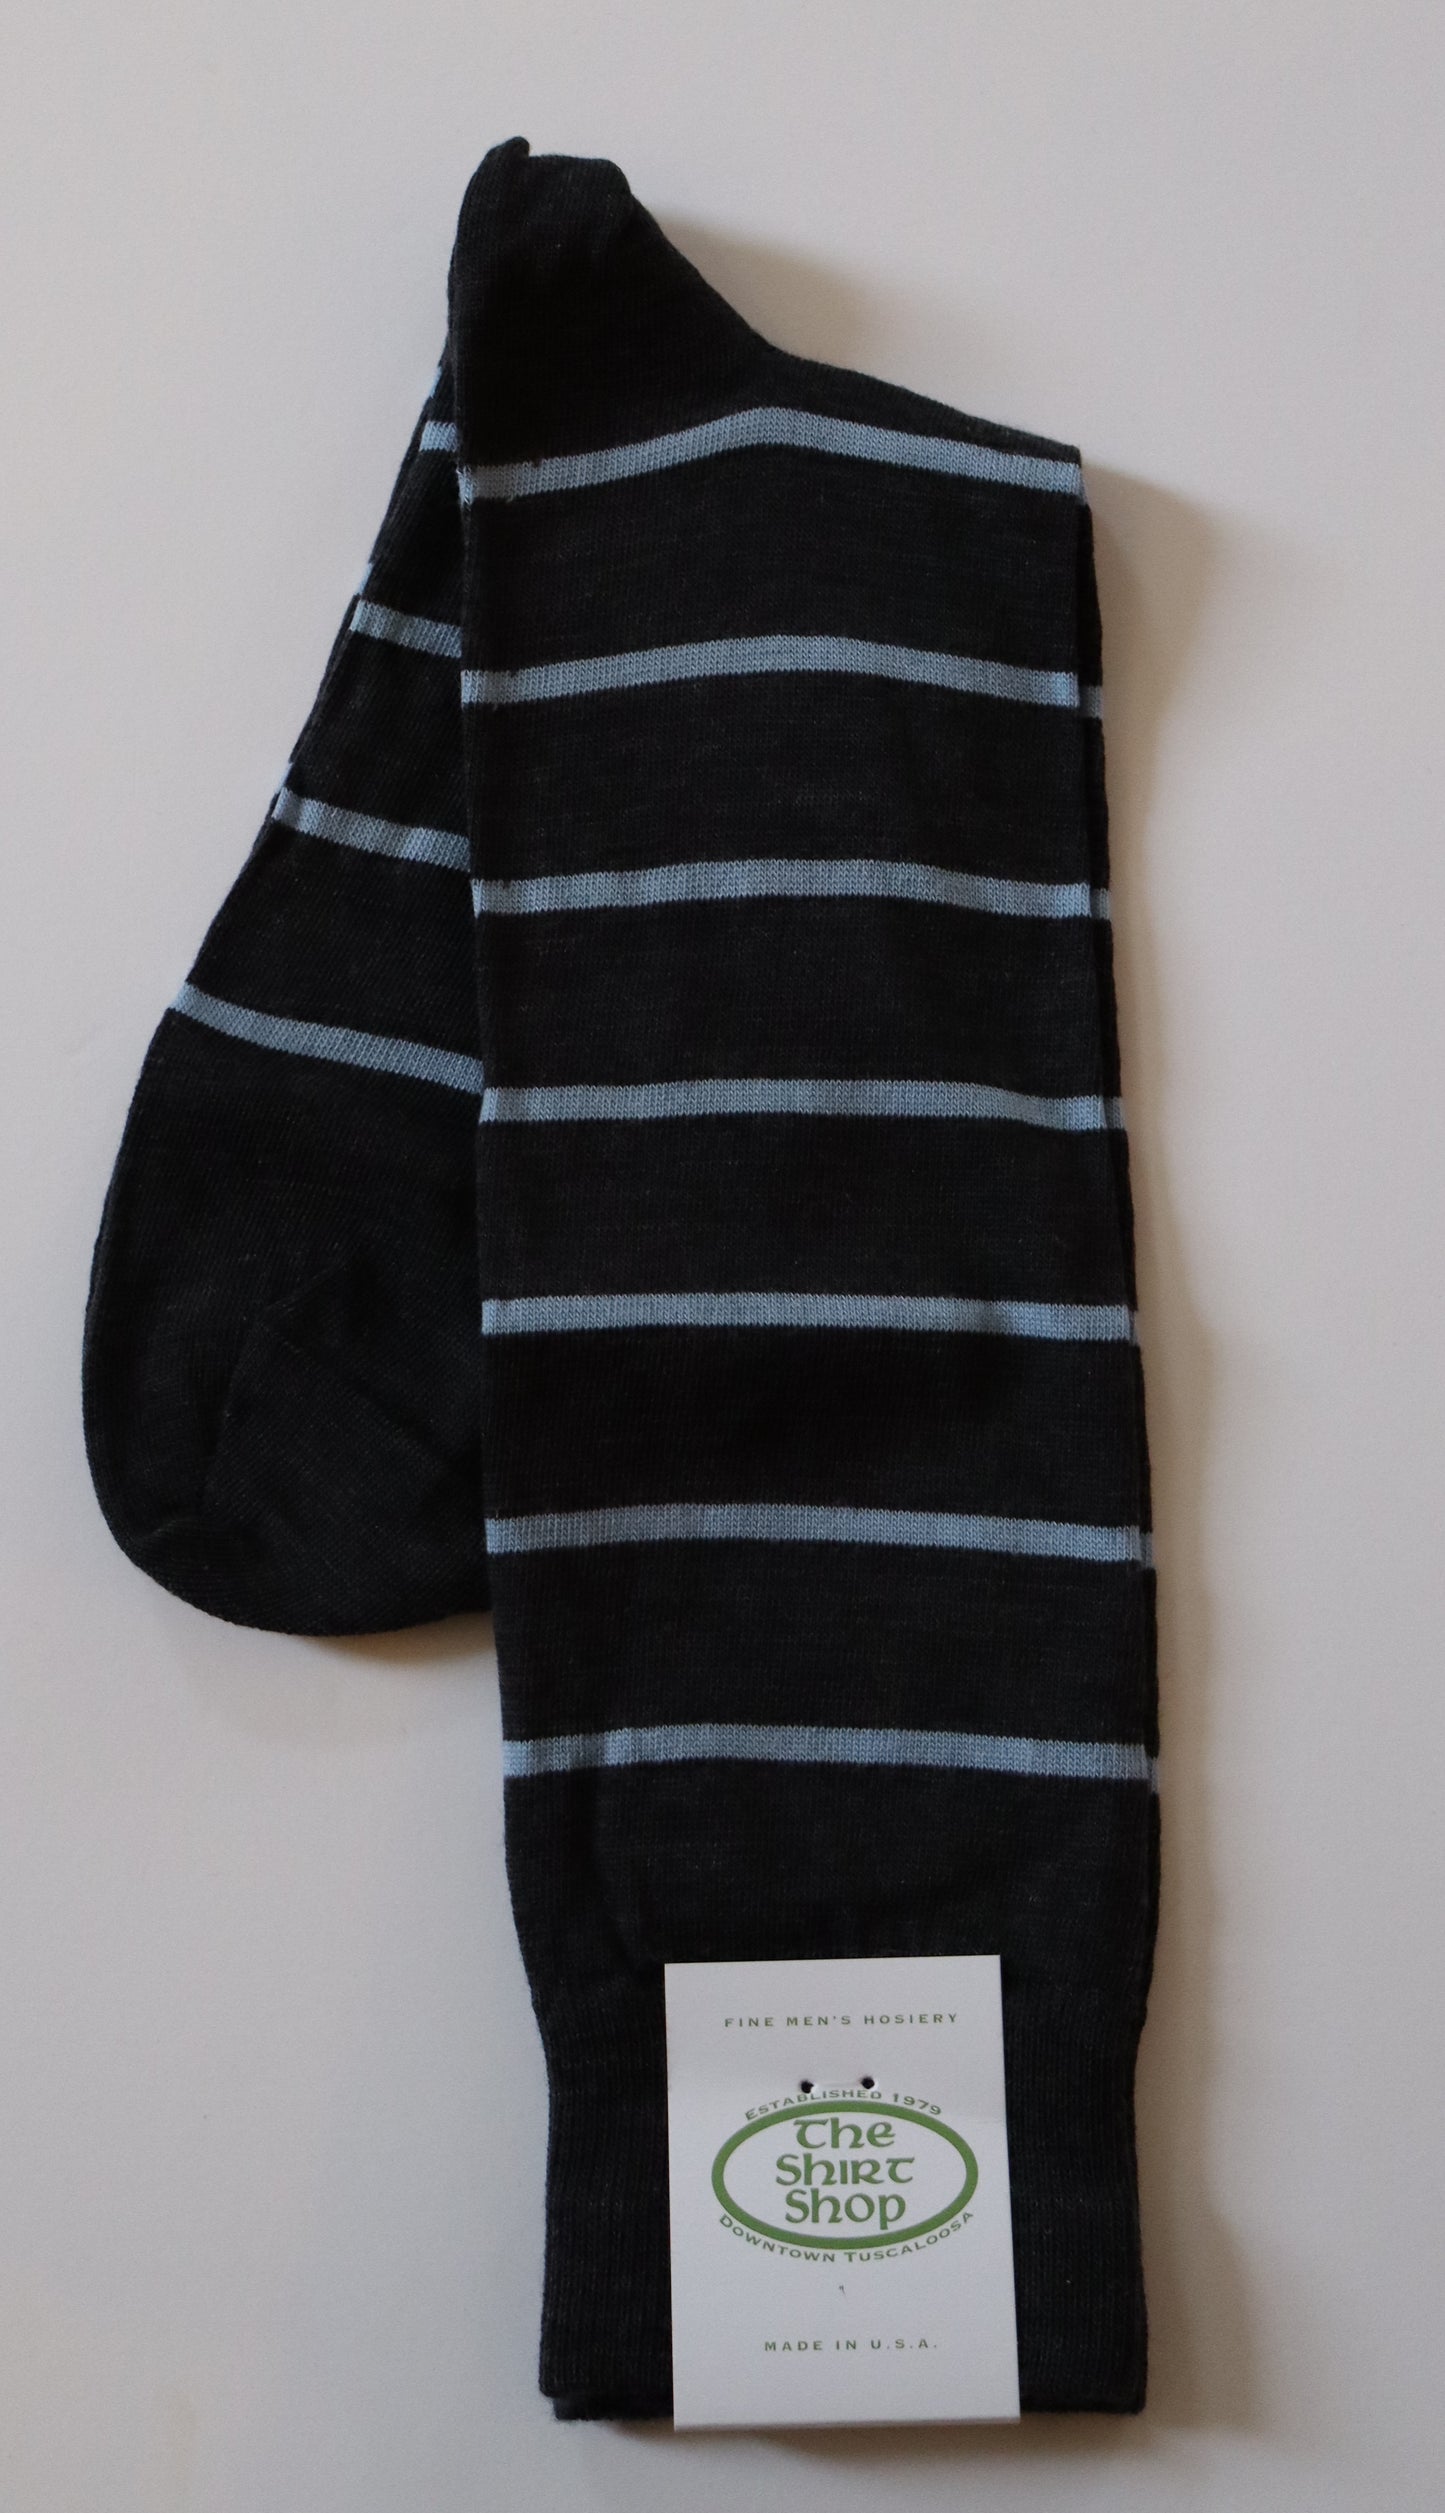 The Shirt Shop Dress Socks - Charcoal with Blue Stripe (Mid Calf)